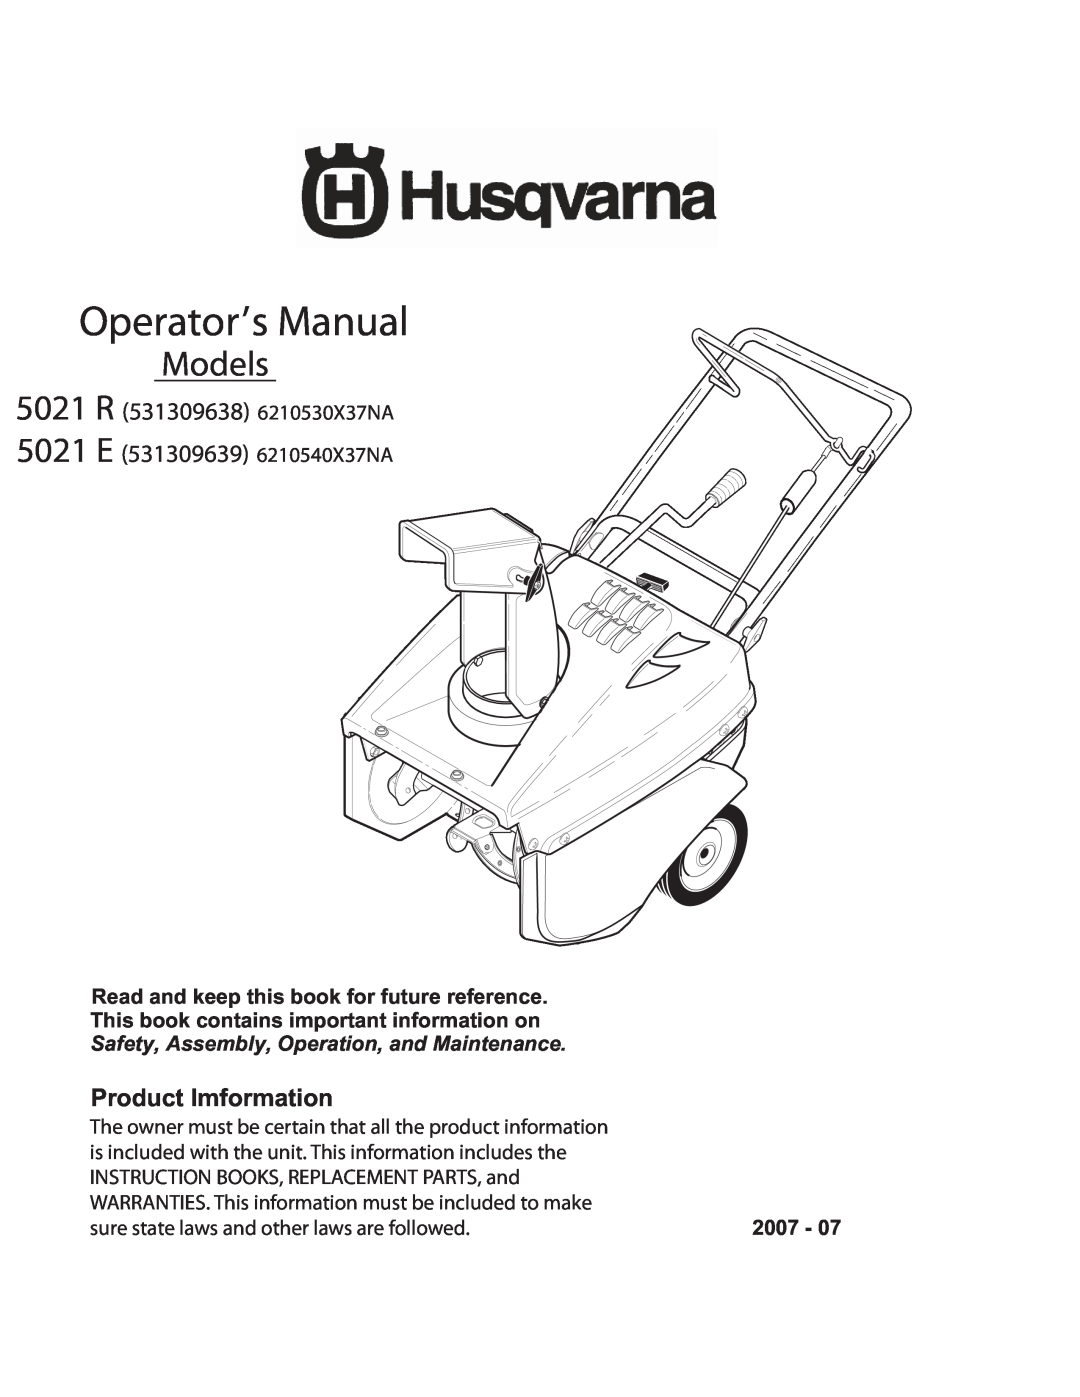 Husqvarna 5021 E manual Safety, Assembly, Operation, and Maintenance, Operator’s Manual, Models, Product Imformation 